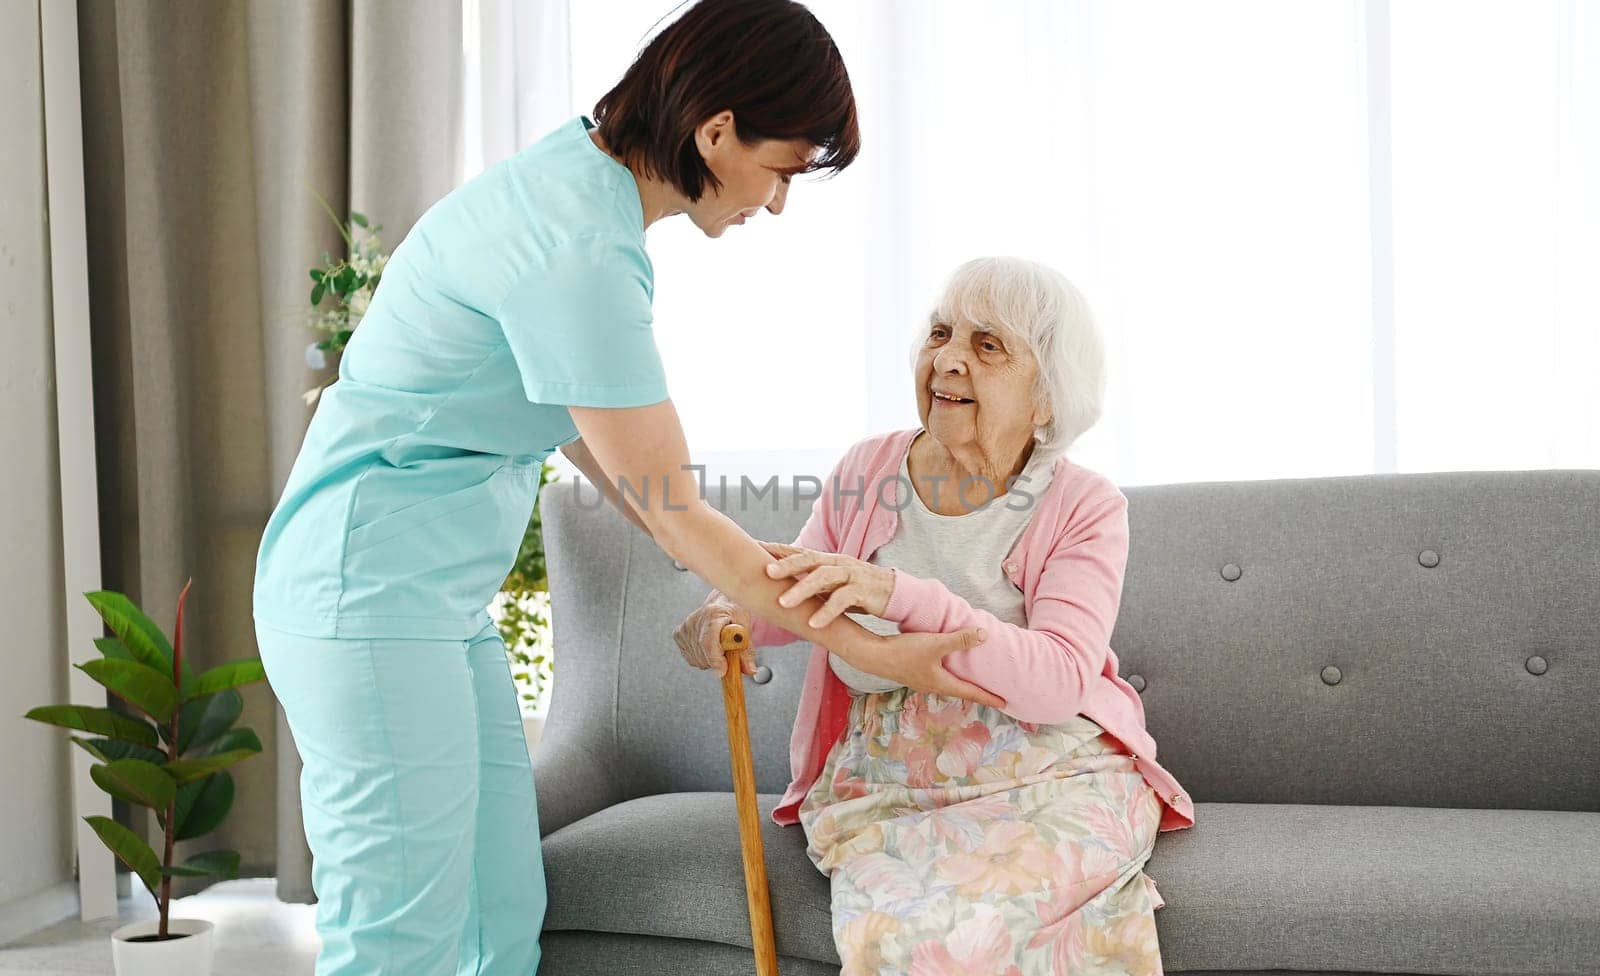 Nurse Hands Cane To Elderly Woman, Helping Her Move Around Room by GekaSkr